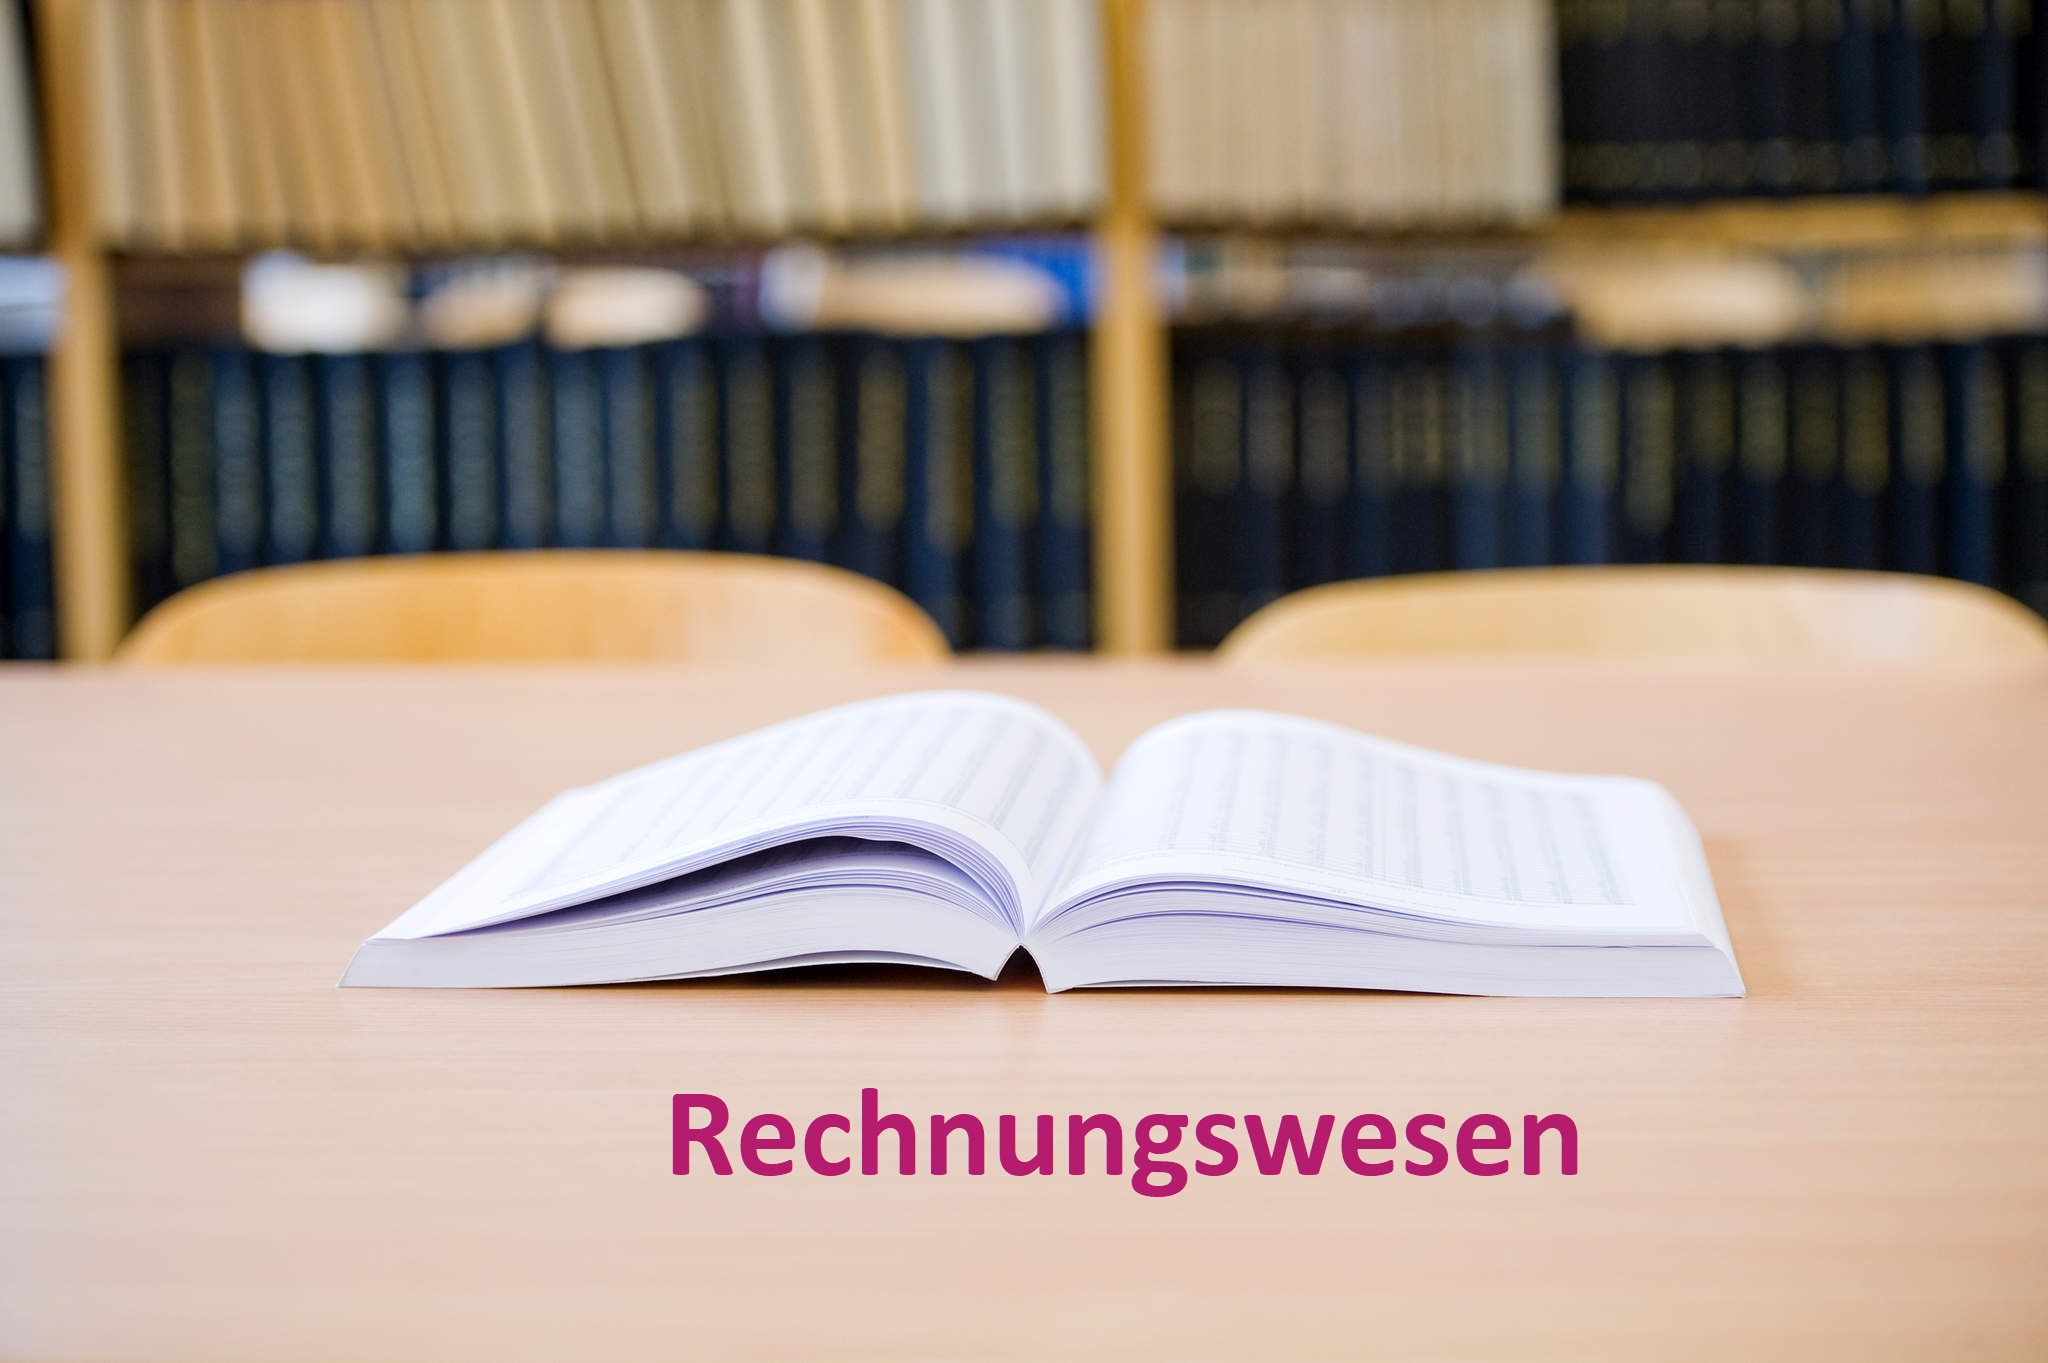 1FU492: Financial reporting in German language